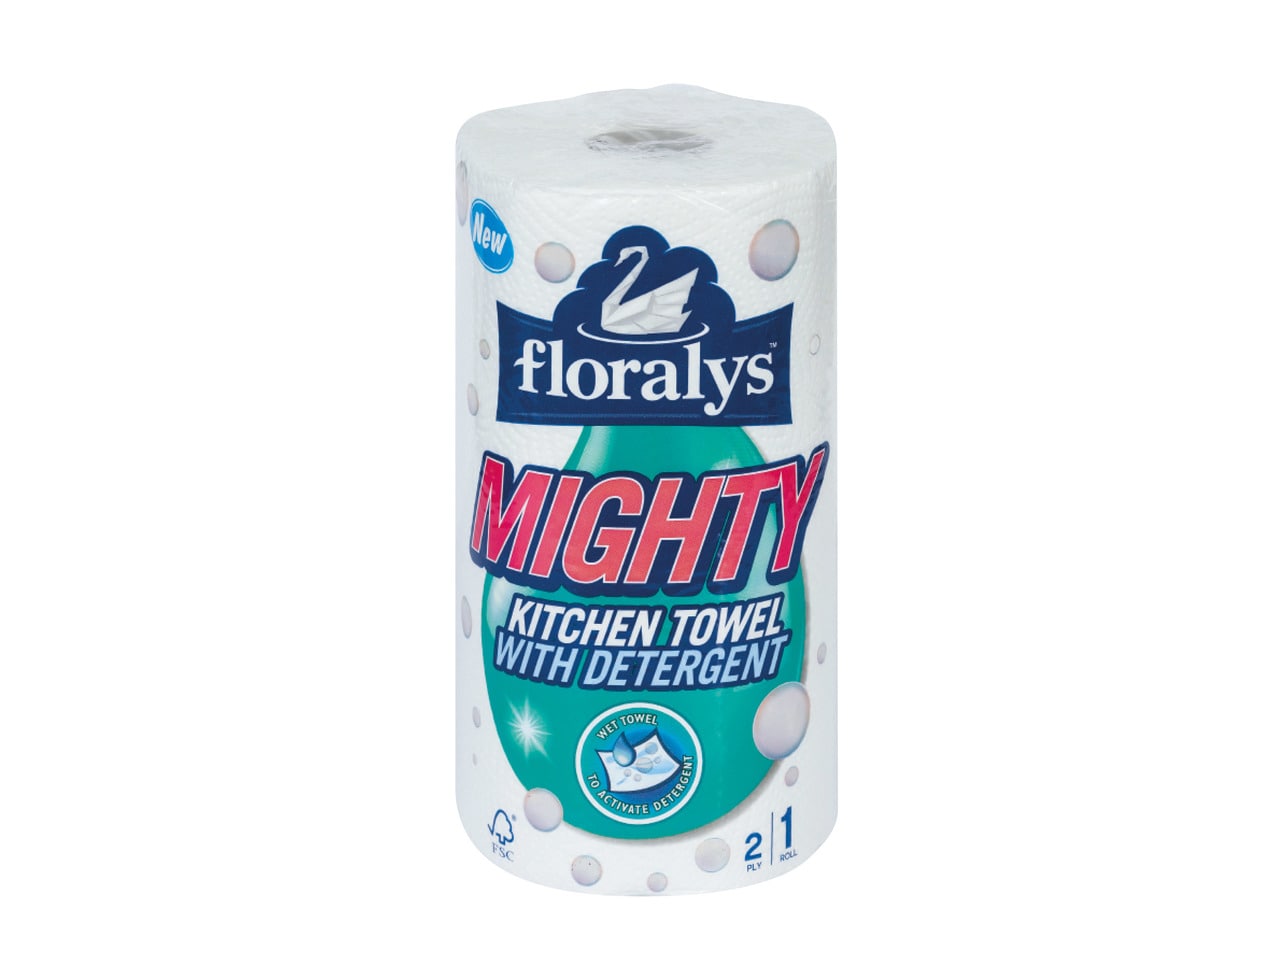 Floralys Mighty Kitchen Towel with Detergent 1